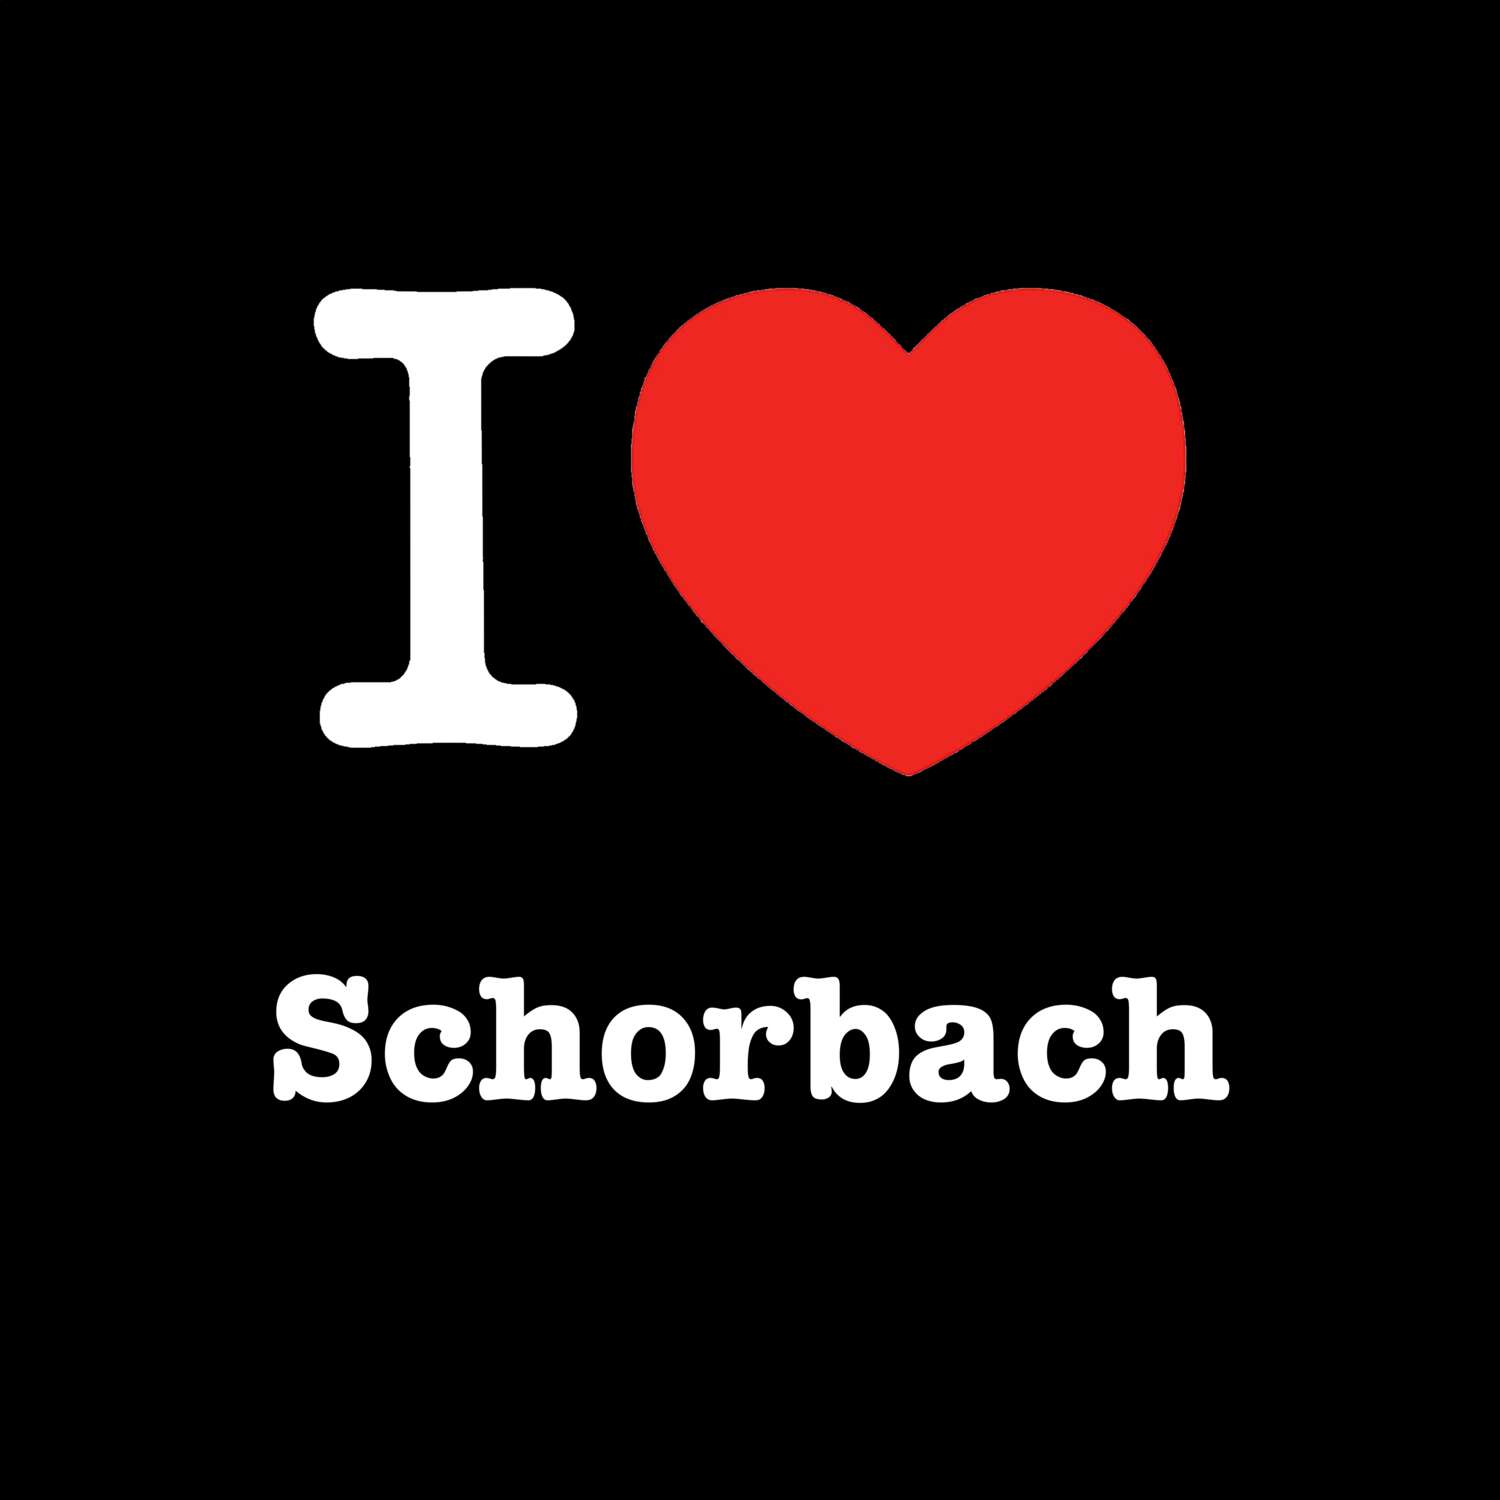 Schorbach T-Shirt »I love«